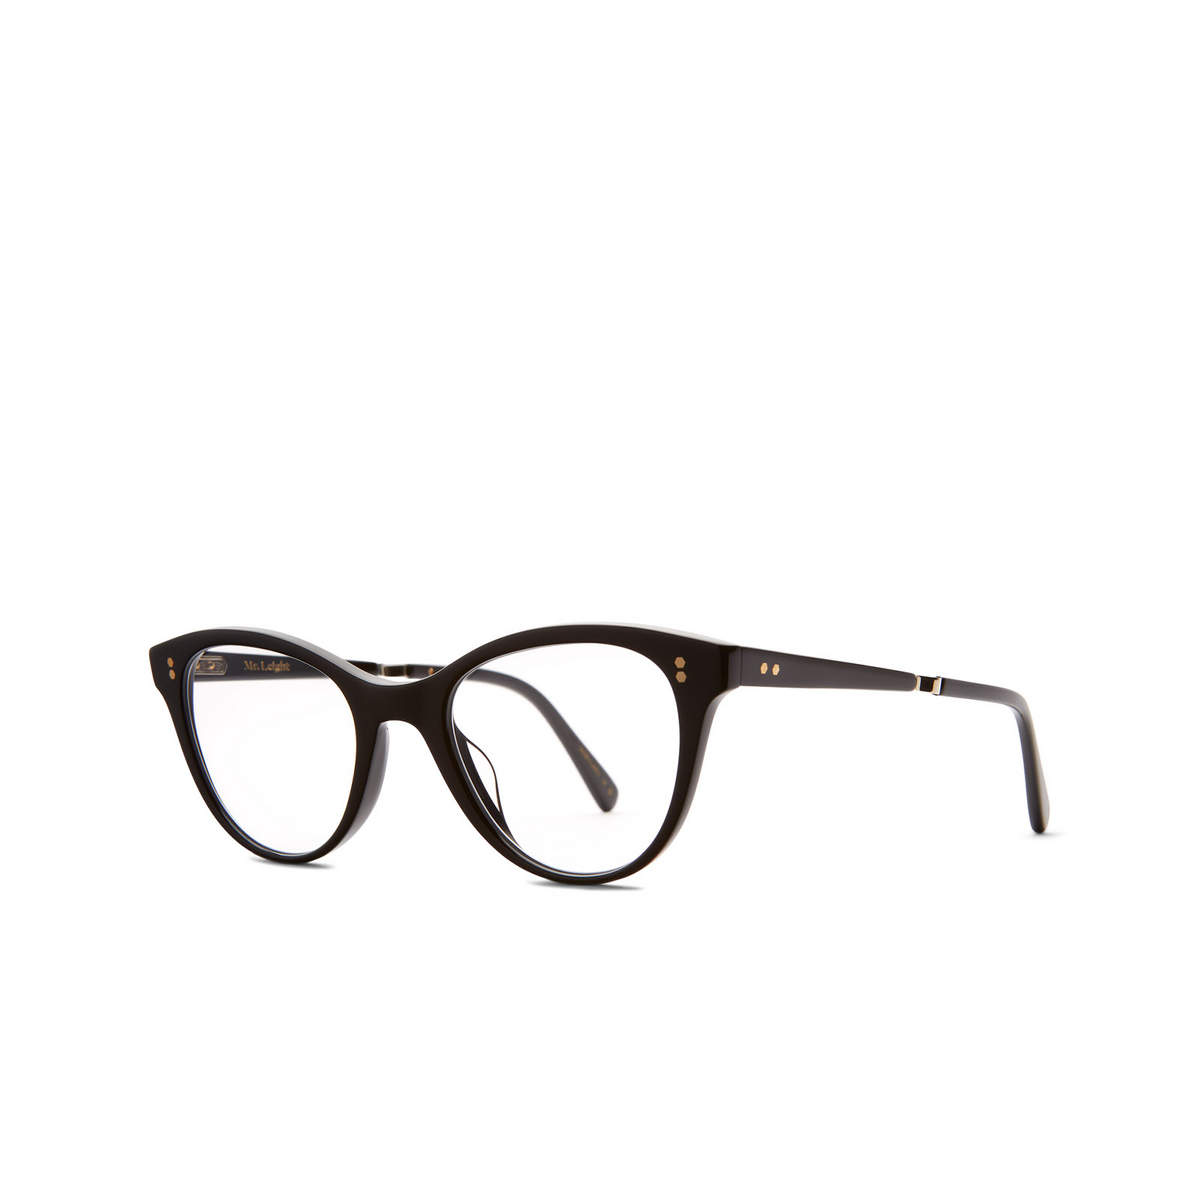 Mr. Leight TAYLOR C Eyeglasses BK-12KG Black-12K White Gold - three-quarters view